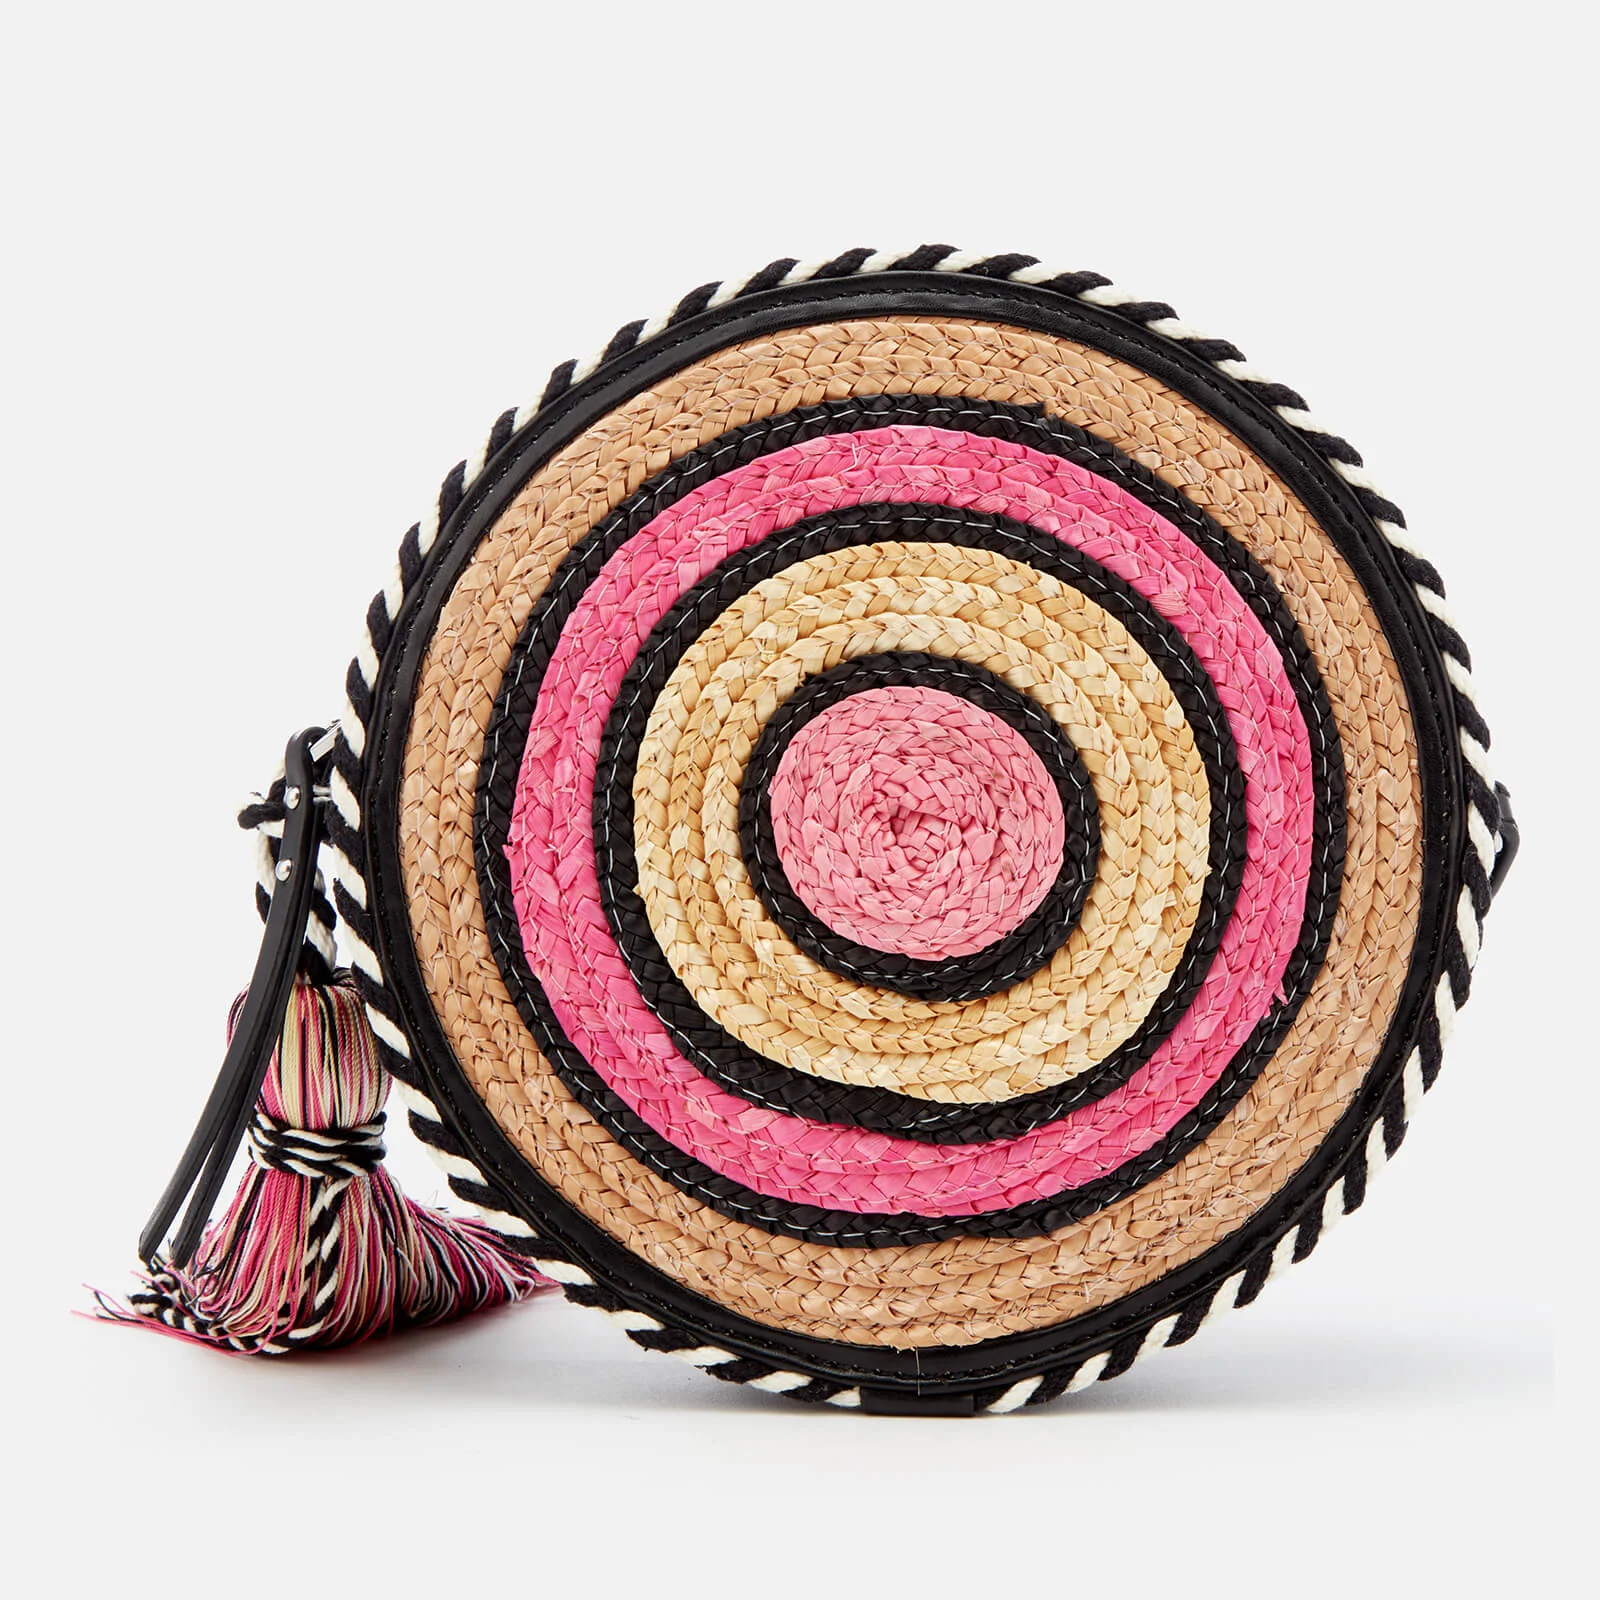 Rebecca Minkoff Women's Straw Circle Cross Body Bag - Pink Multi Image 1